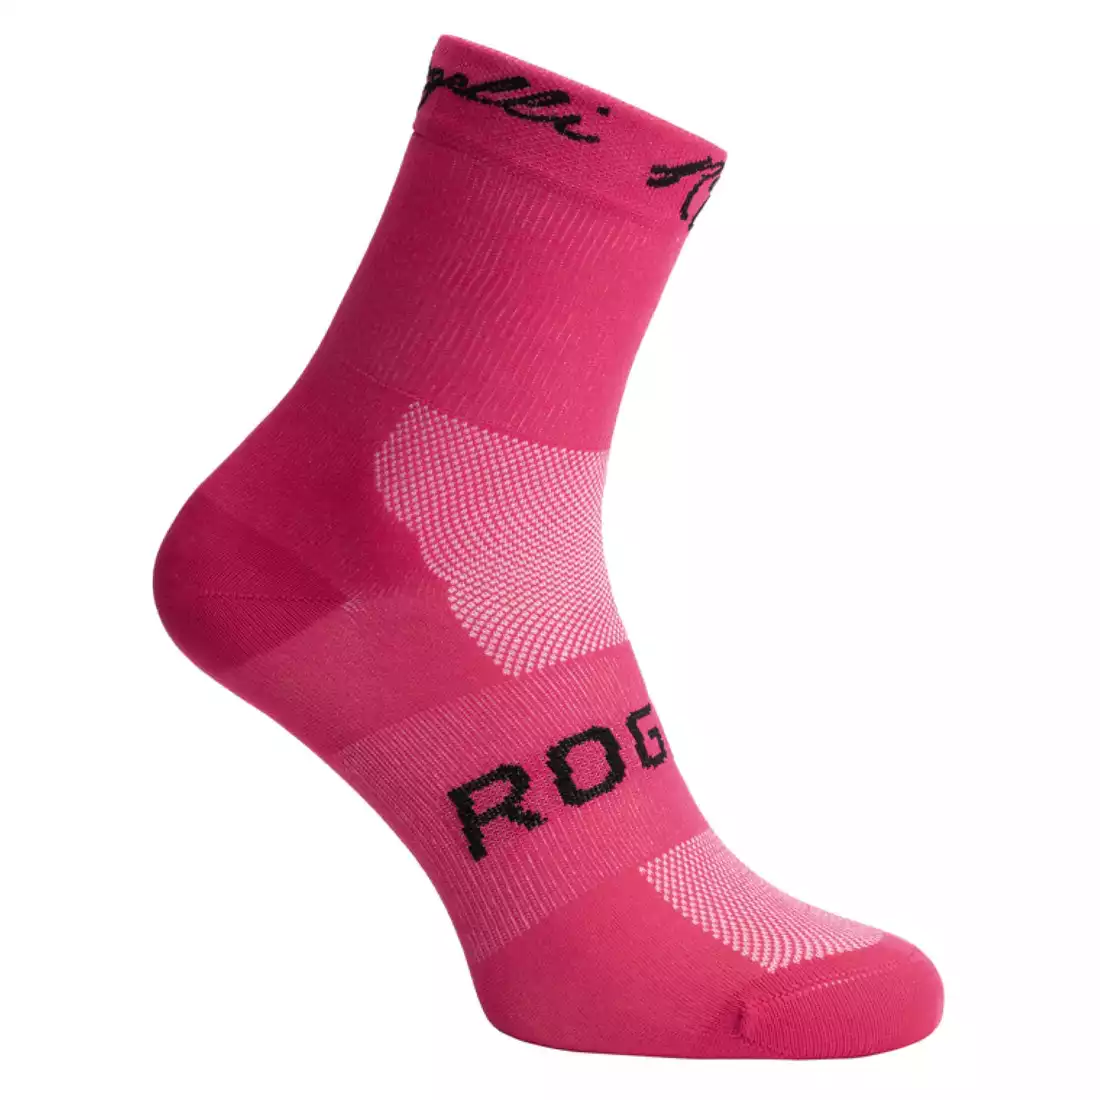 ROGELLI Q-SKIN Női sportzokni, rózsaszín